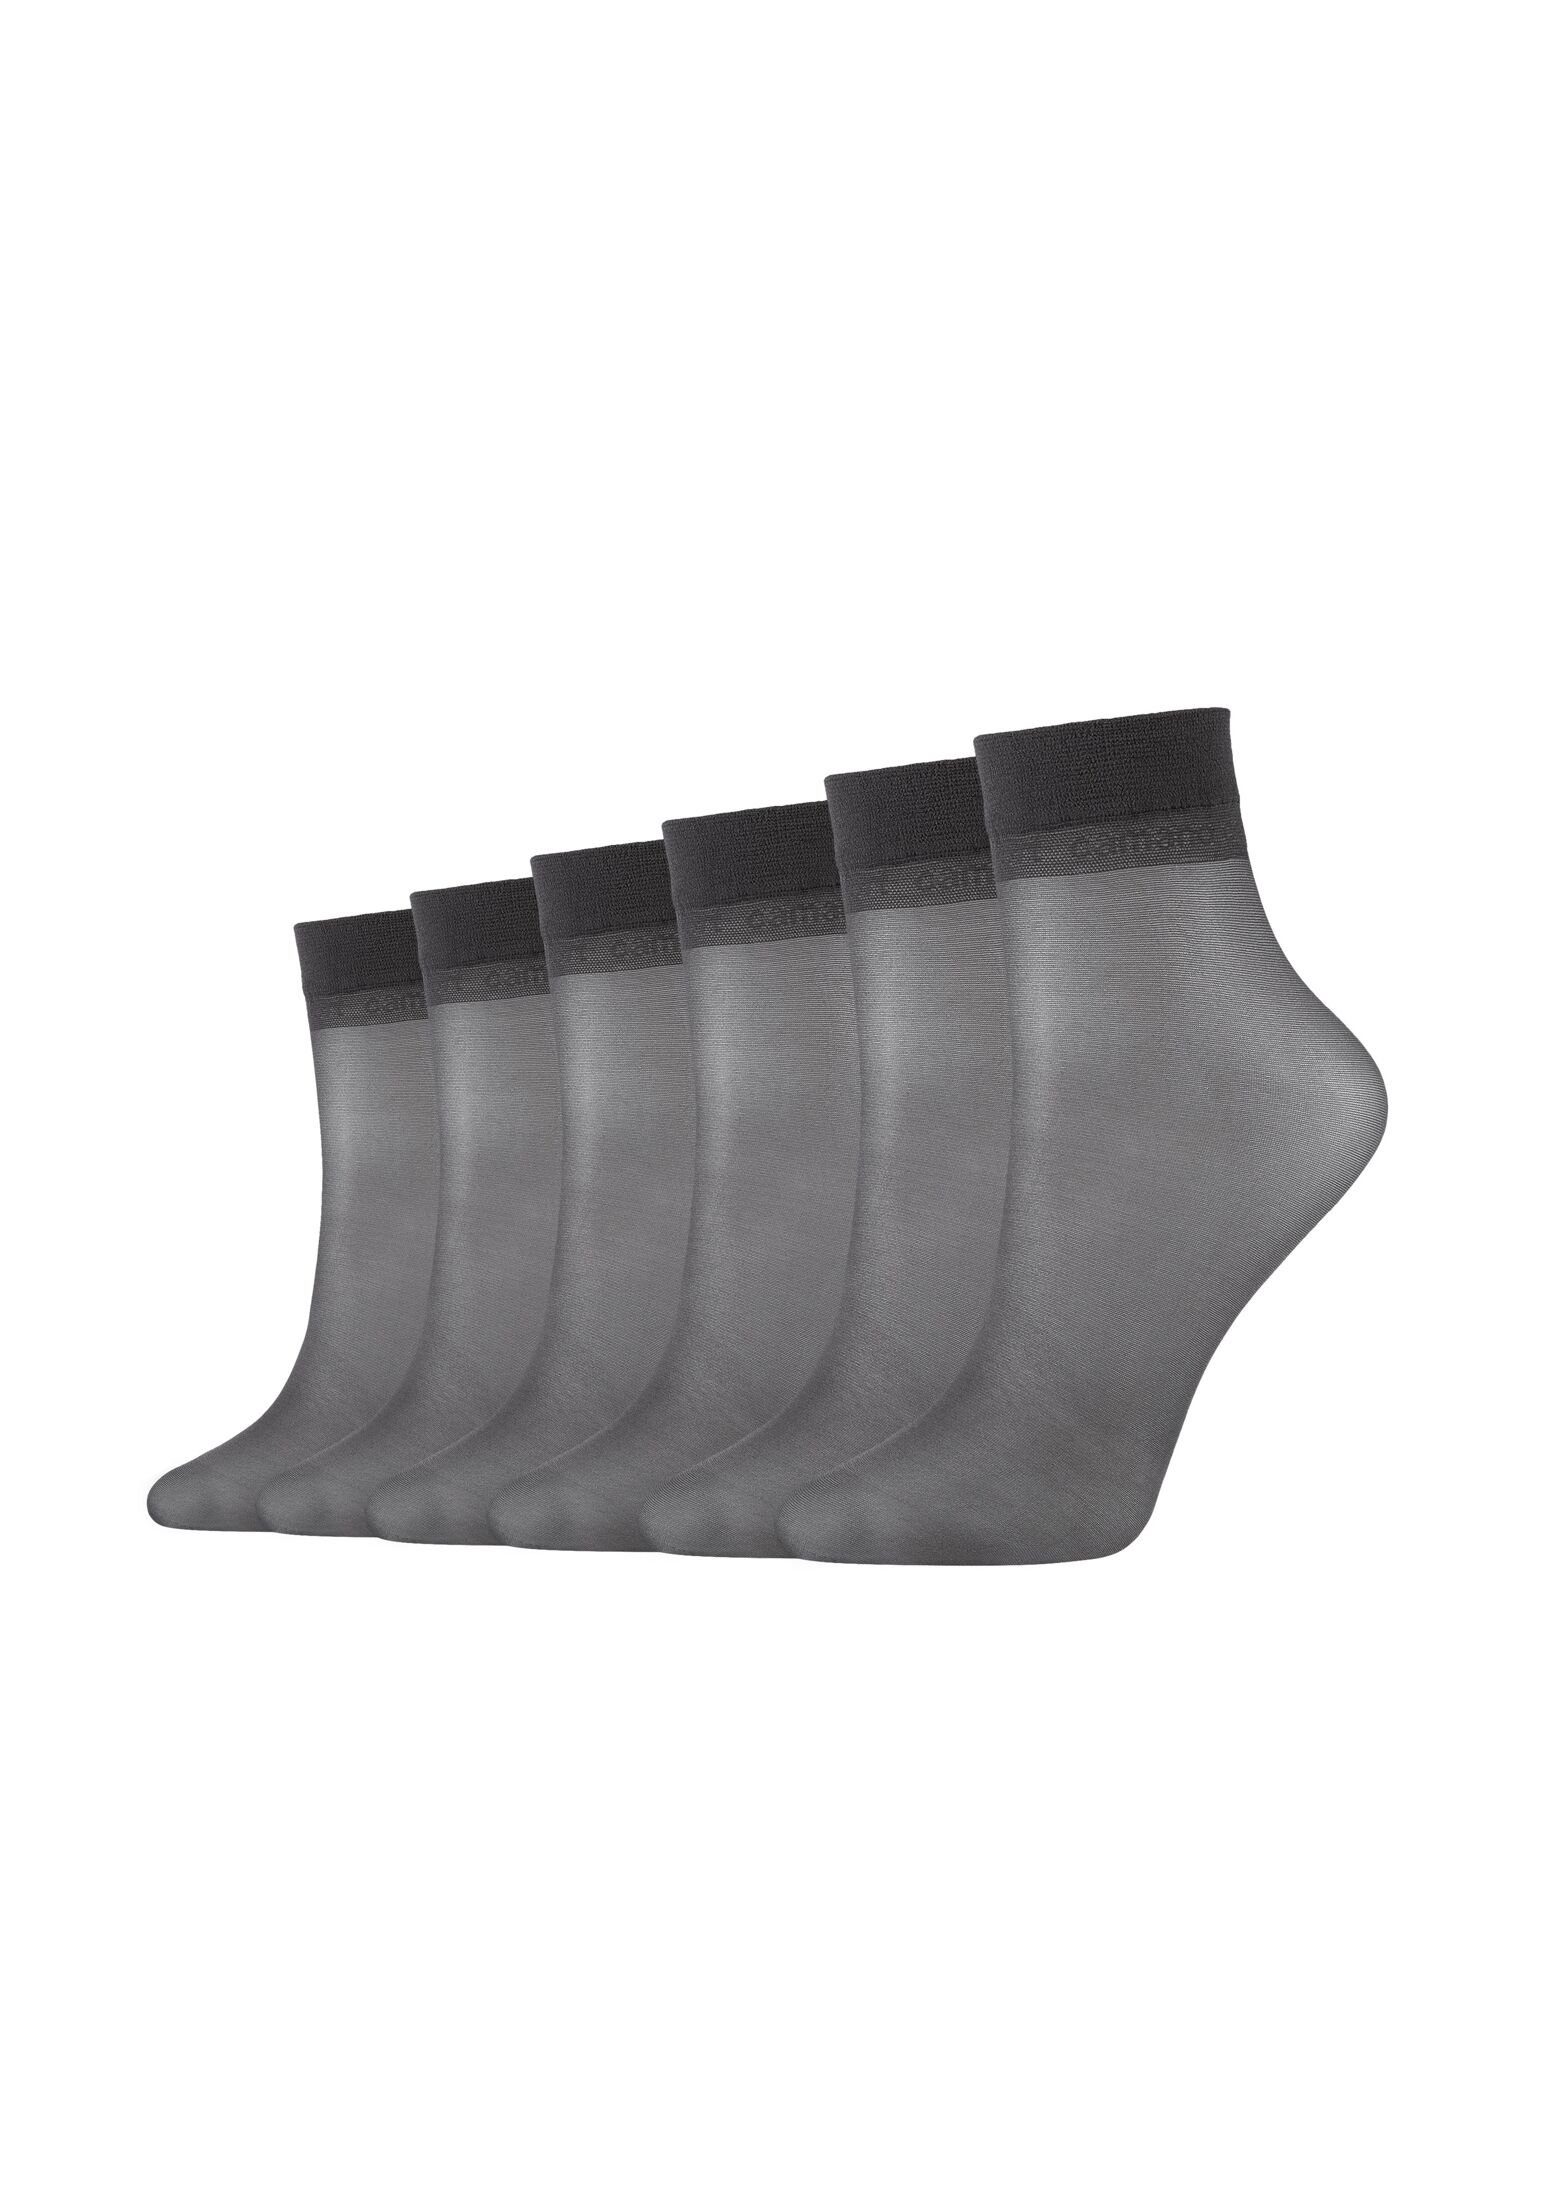 Offizieller Online-Verkauf Camano Socken Socken 6er anthracite Pack